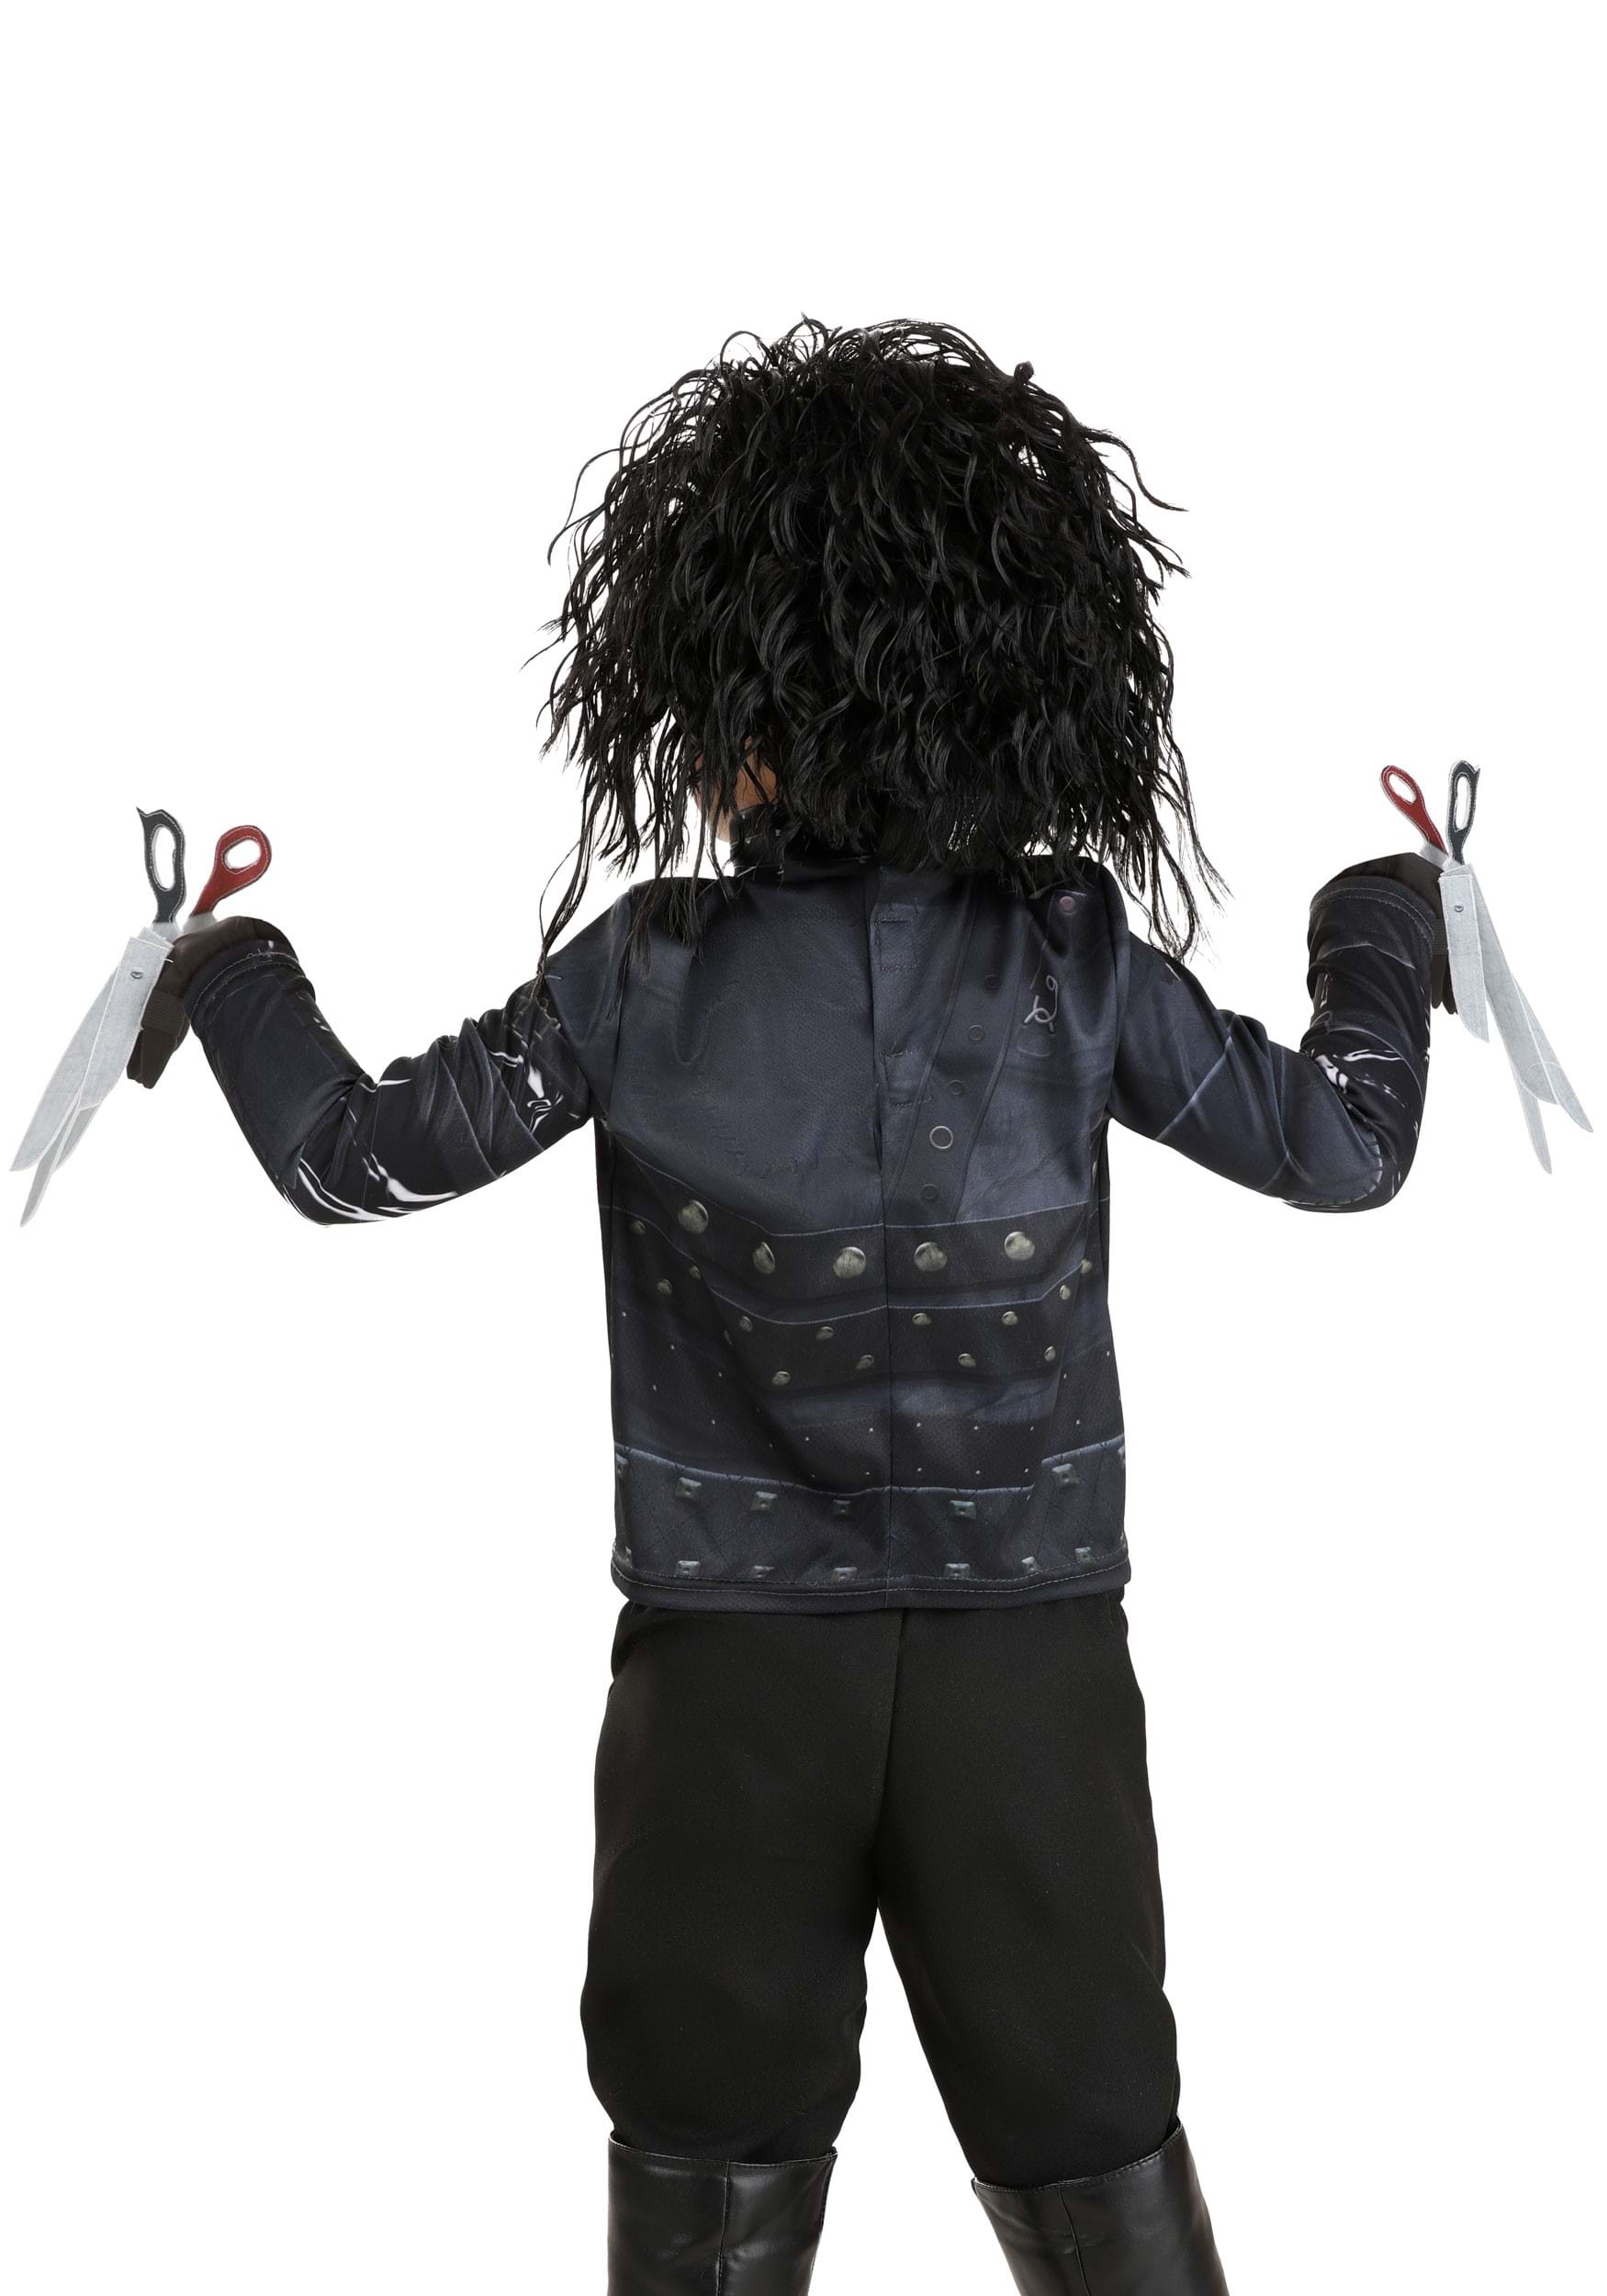 Toddler Classic Edward Scissorhands Costume For Boys